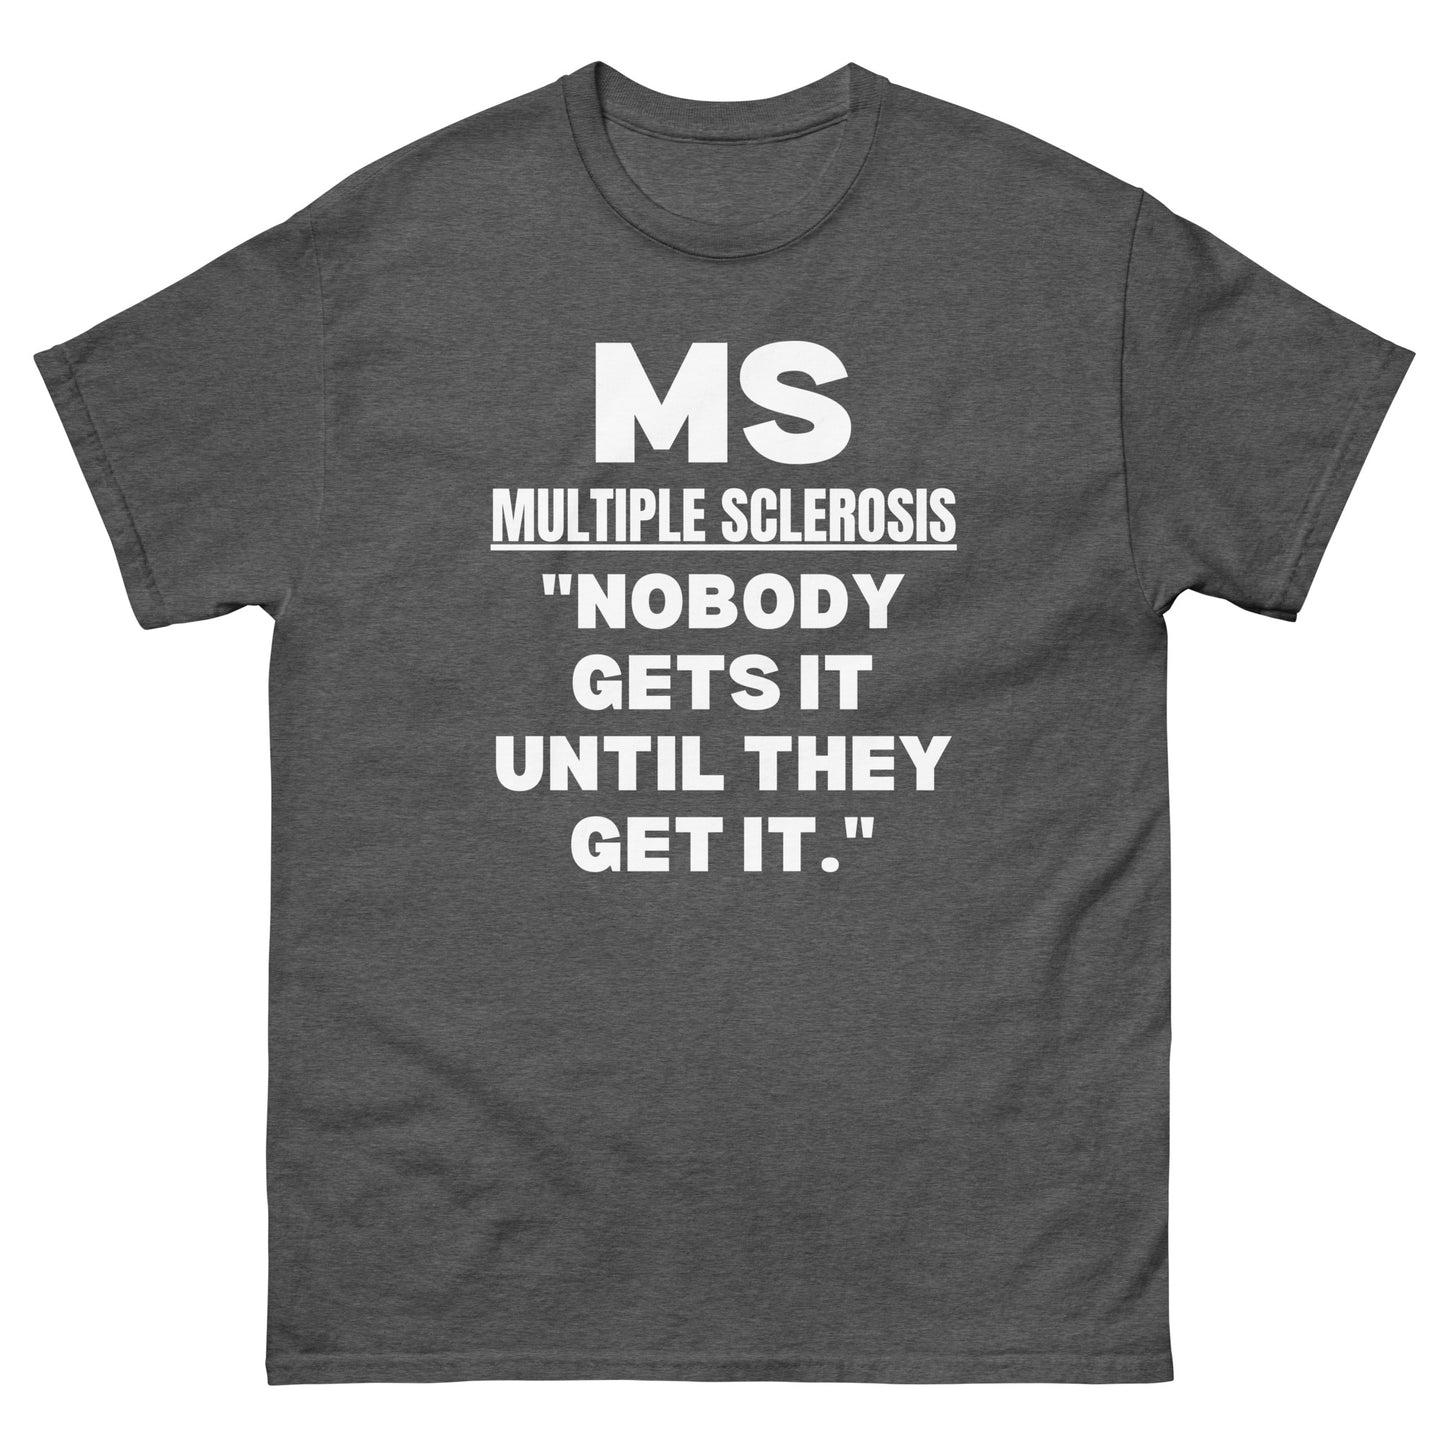 MS Multiple sclerosis Awareness, Multiple sclerosis Support, Multiple sclerosis warrior, Multiple sclerosis quote, Multiple sclerosis gift